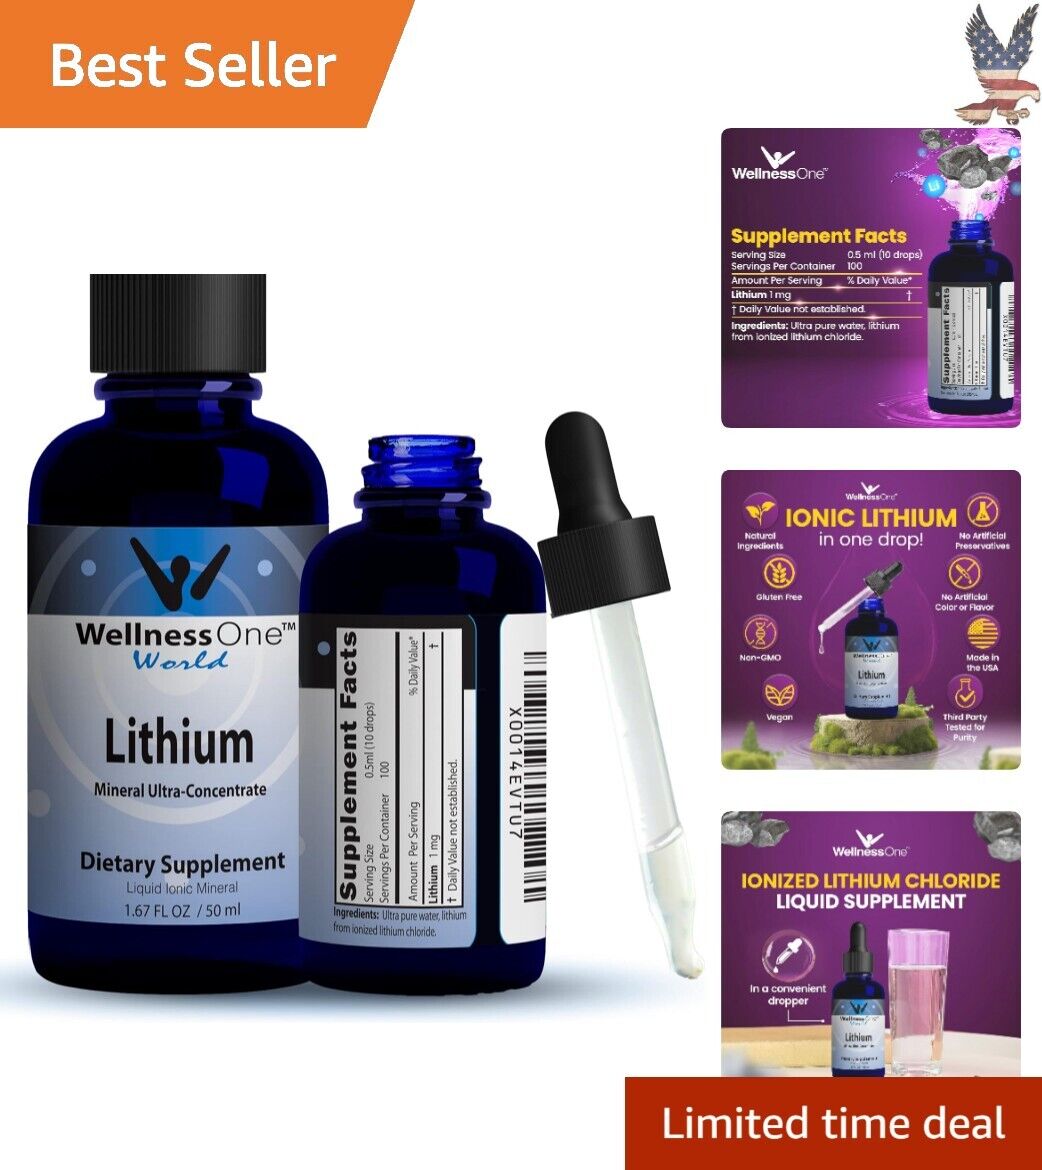 Premium Organic Lithium Brain & Mood Support Drops - 1.67 fl oz - Gluten Free